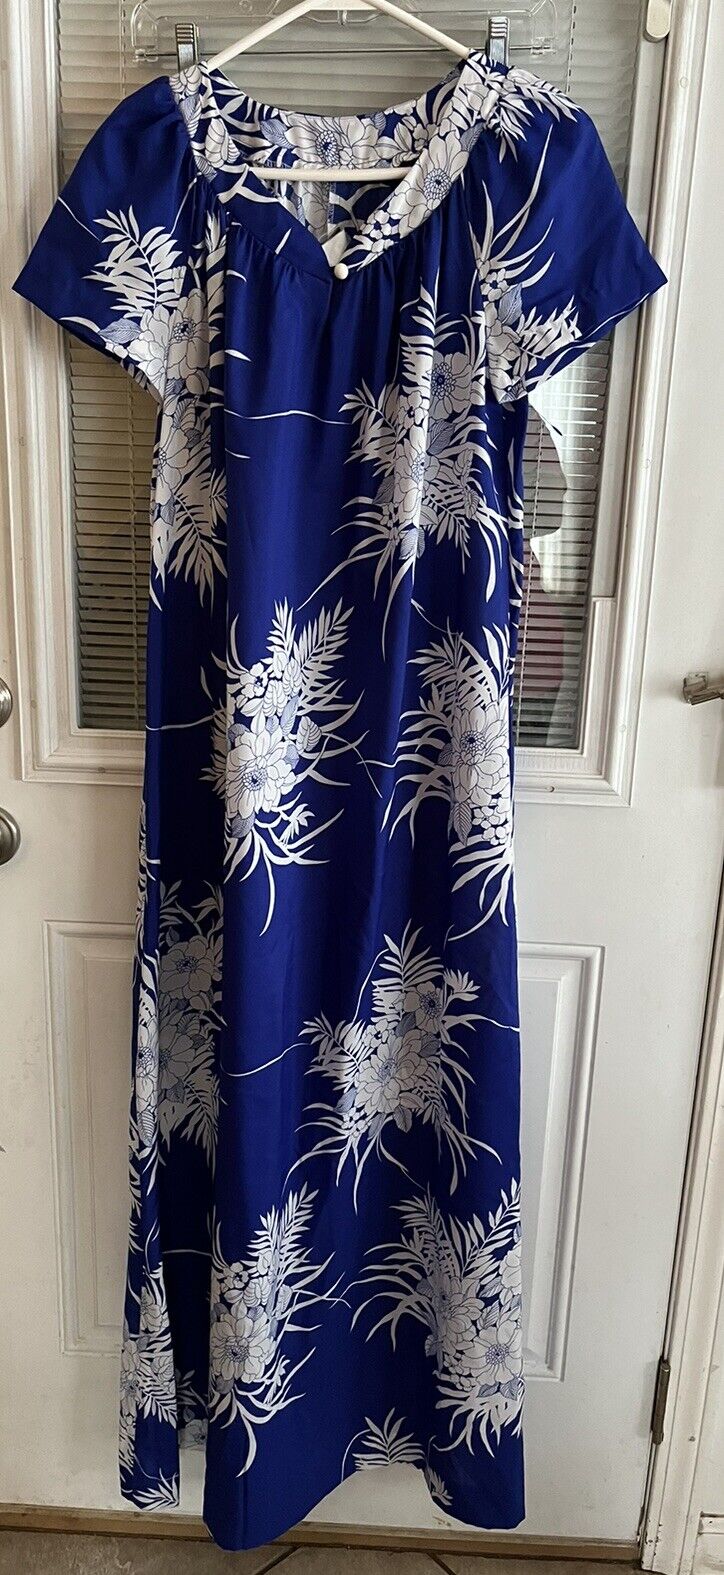 Hilo Hattie Dress Hawaii Blue White Floral Long Maxi Sht Sleeve Vntg Worn 1 Sz S